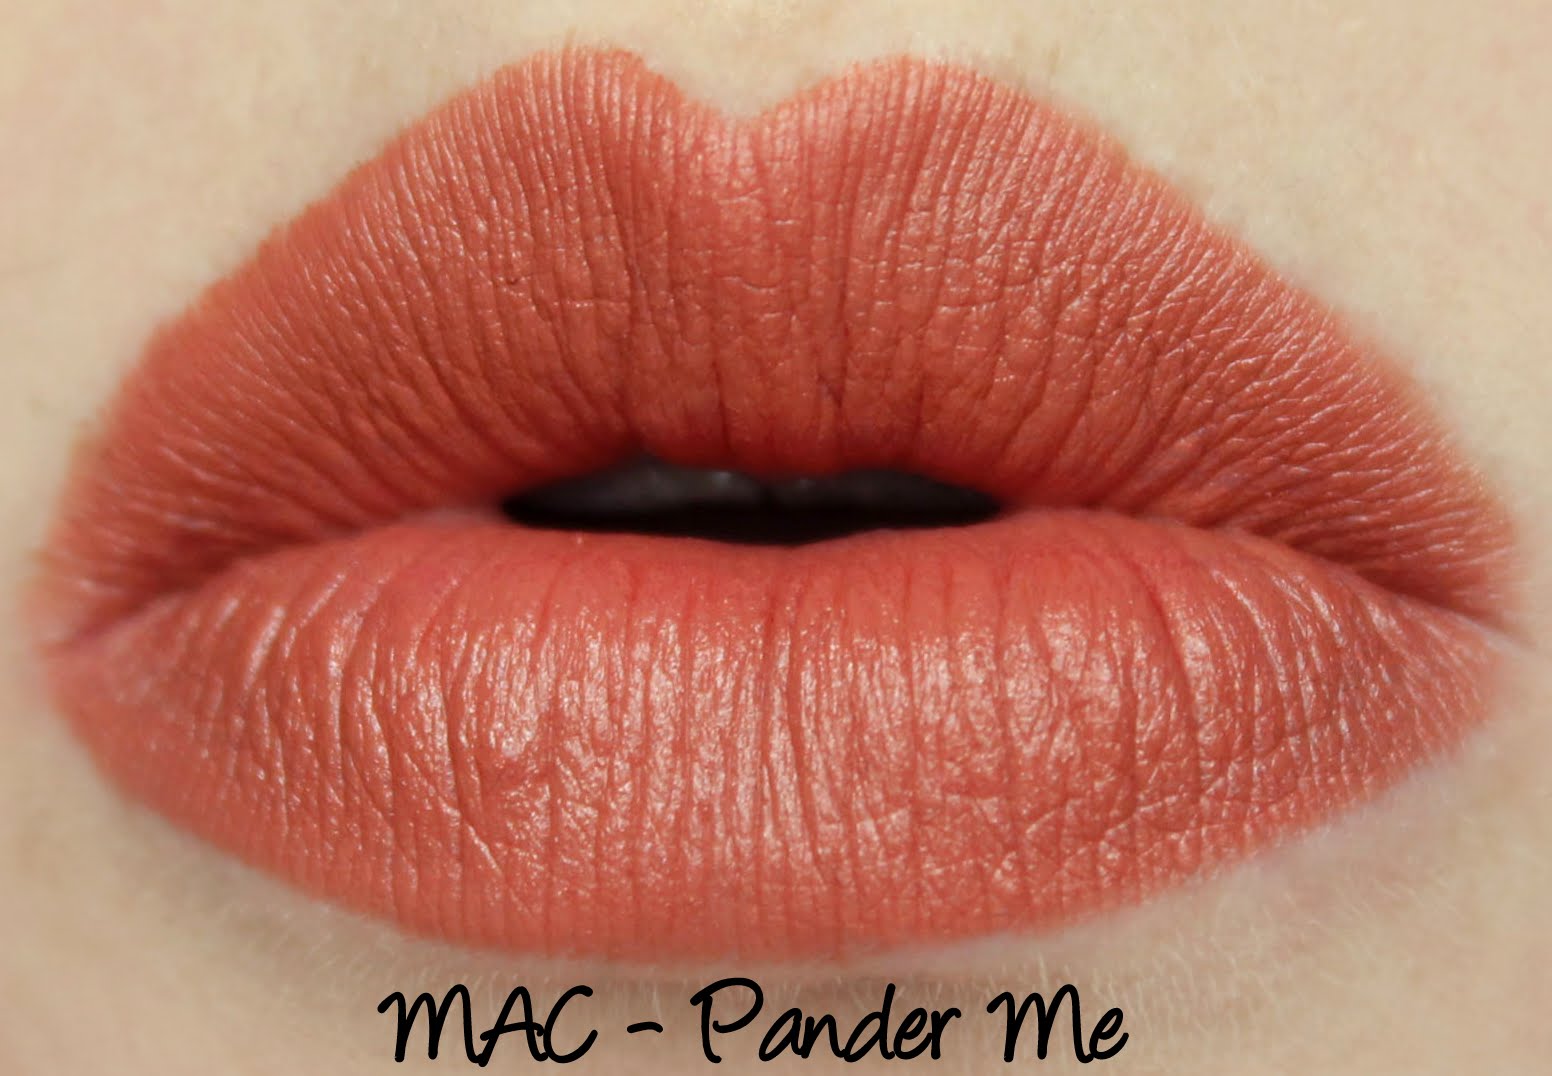 MAC Pander Me lipstick swatch.jpg